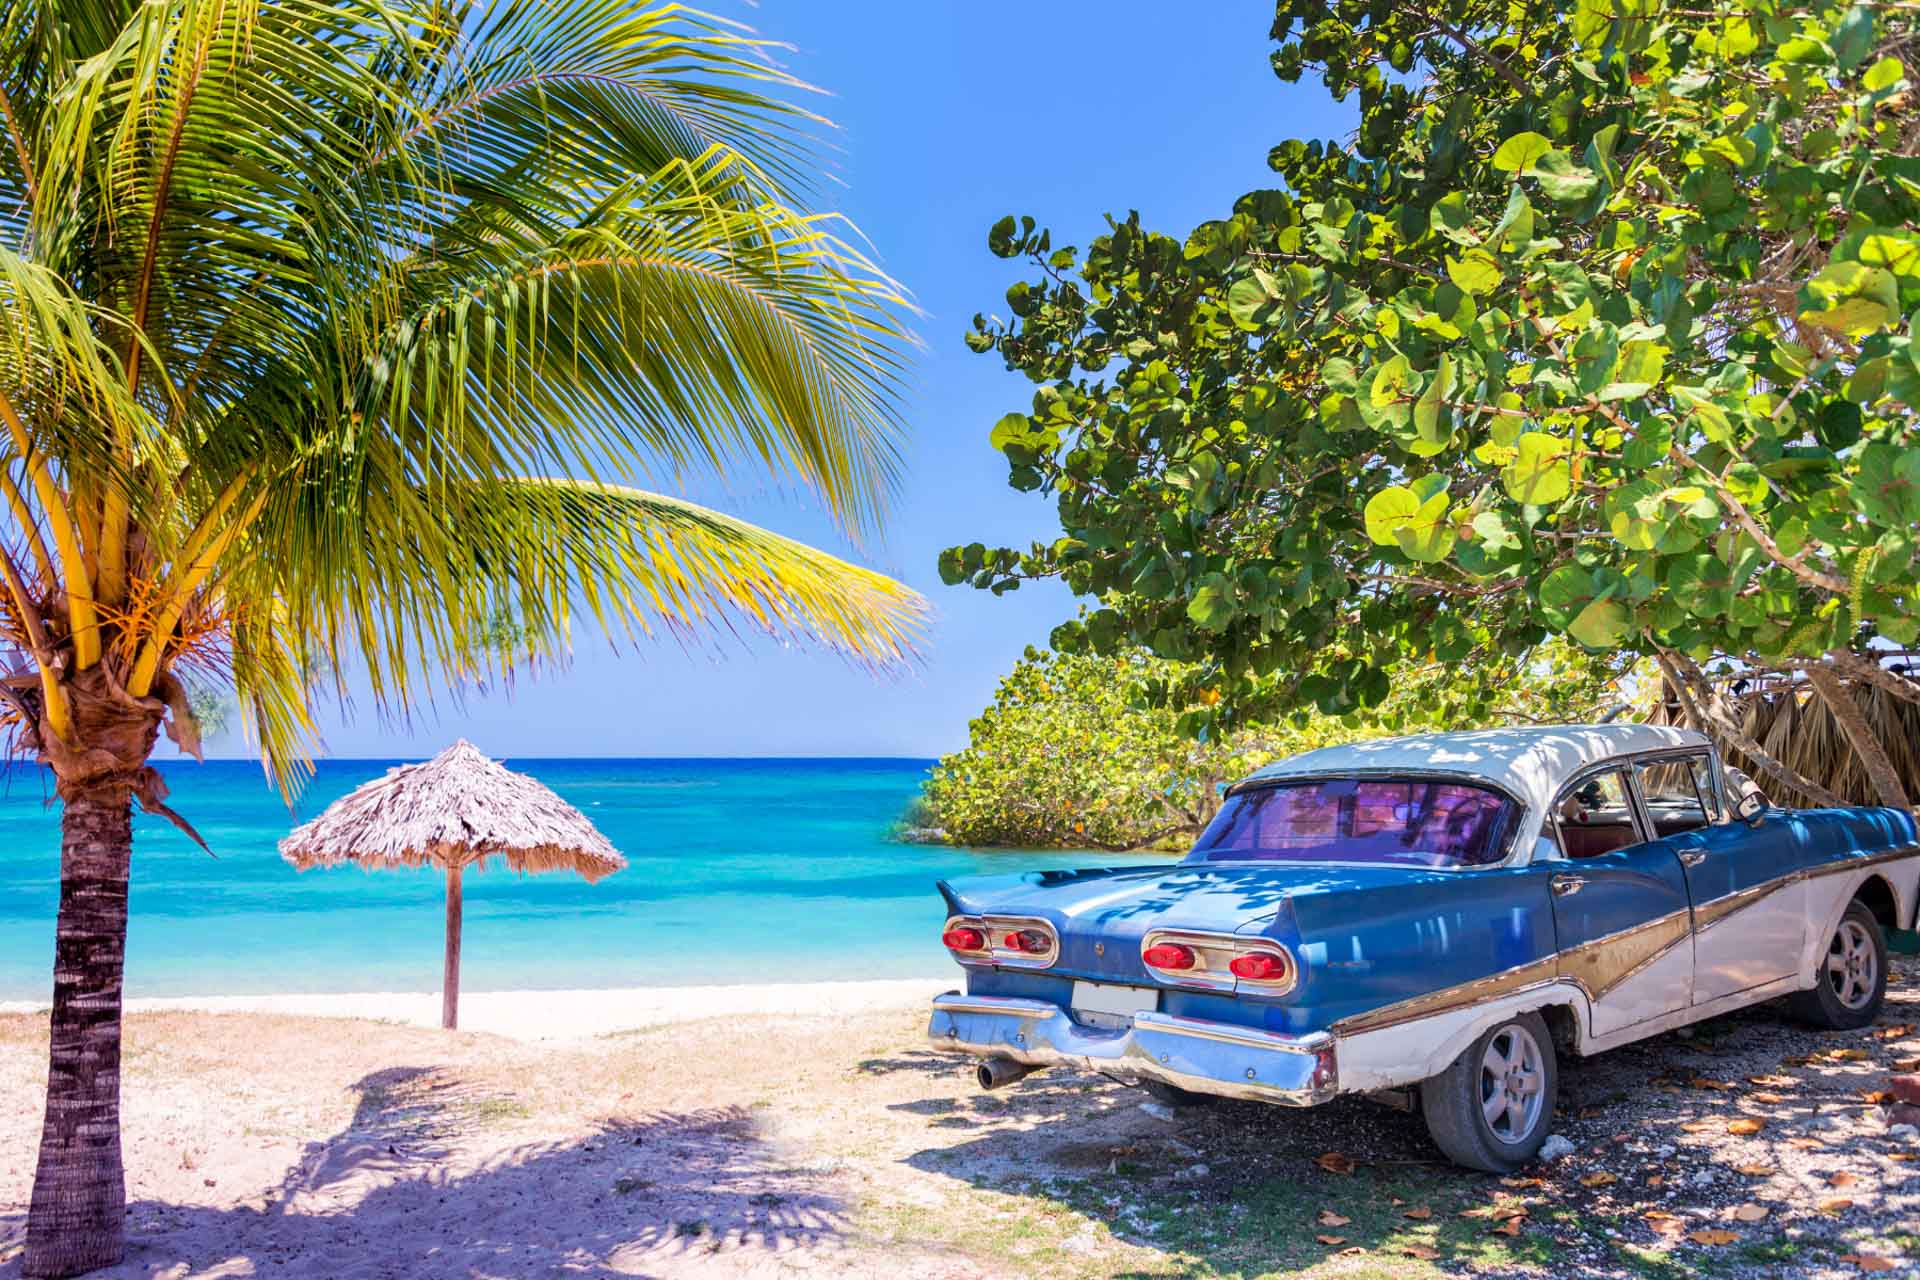 Car parked next to trees near Cuban beach.